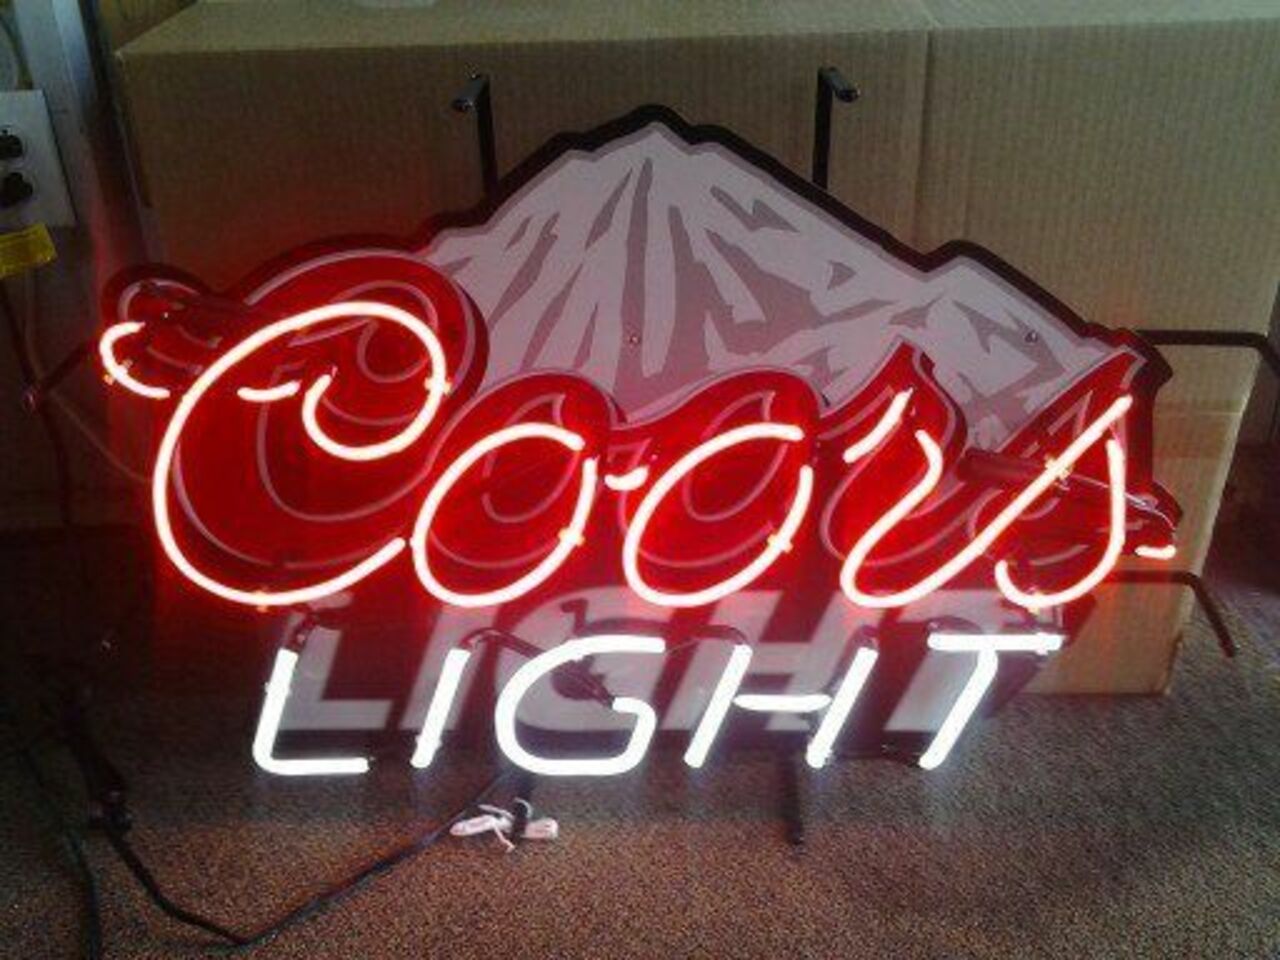 COORS LIGHT NEON BEER SIGN/26X20"/NEW IN BOX!!!!NEW $130.0 #light #beer #painting #art http://goo.gl/28juRT http://t.co/5aBmlRbcoX